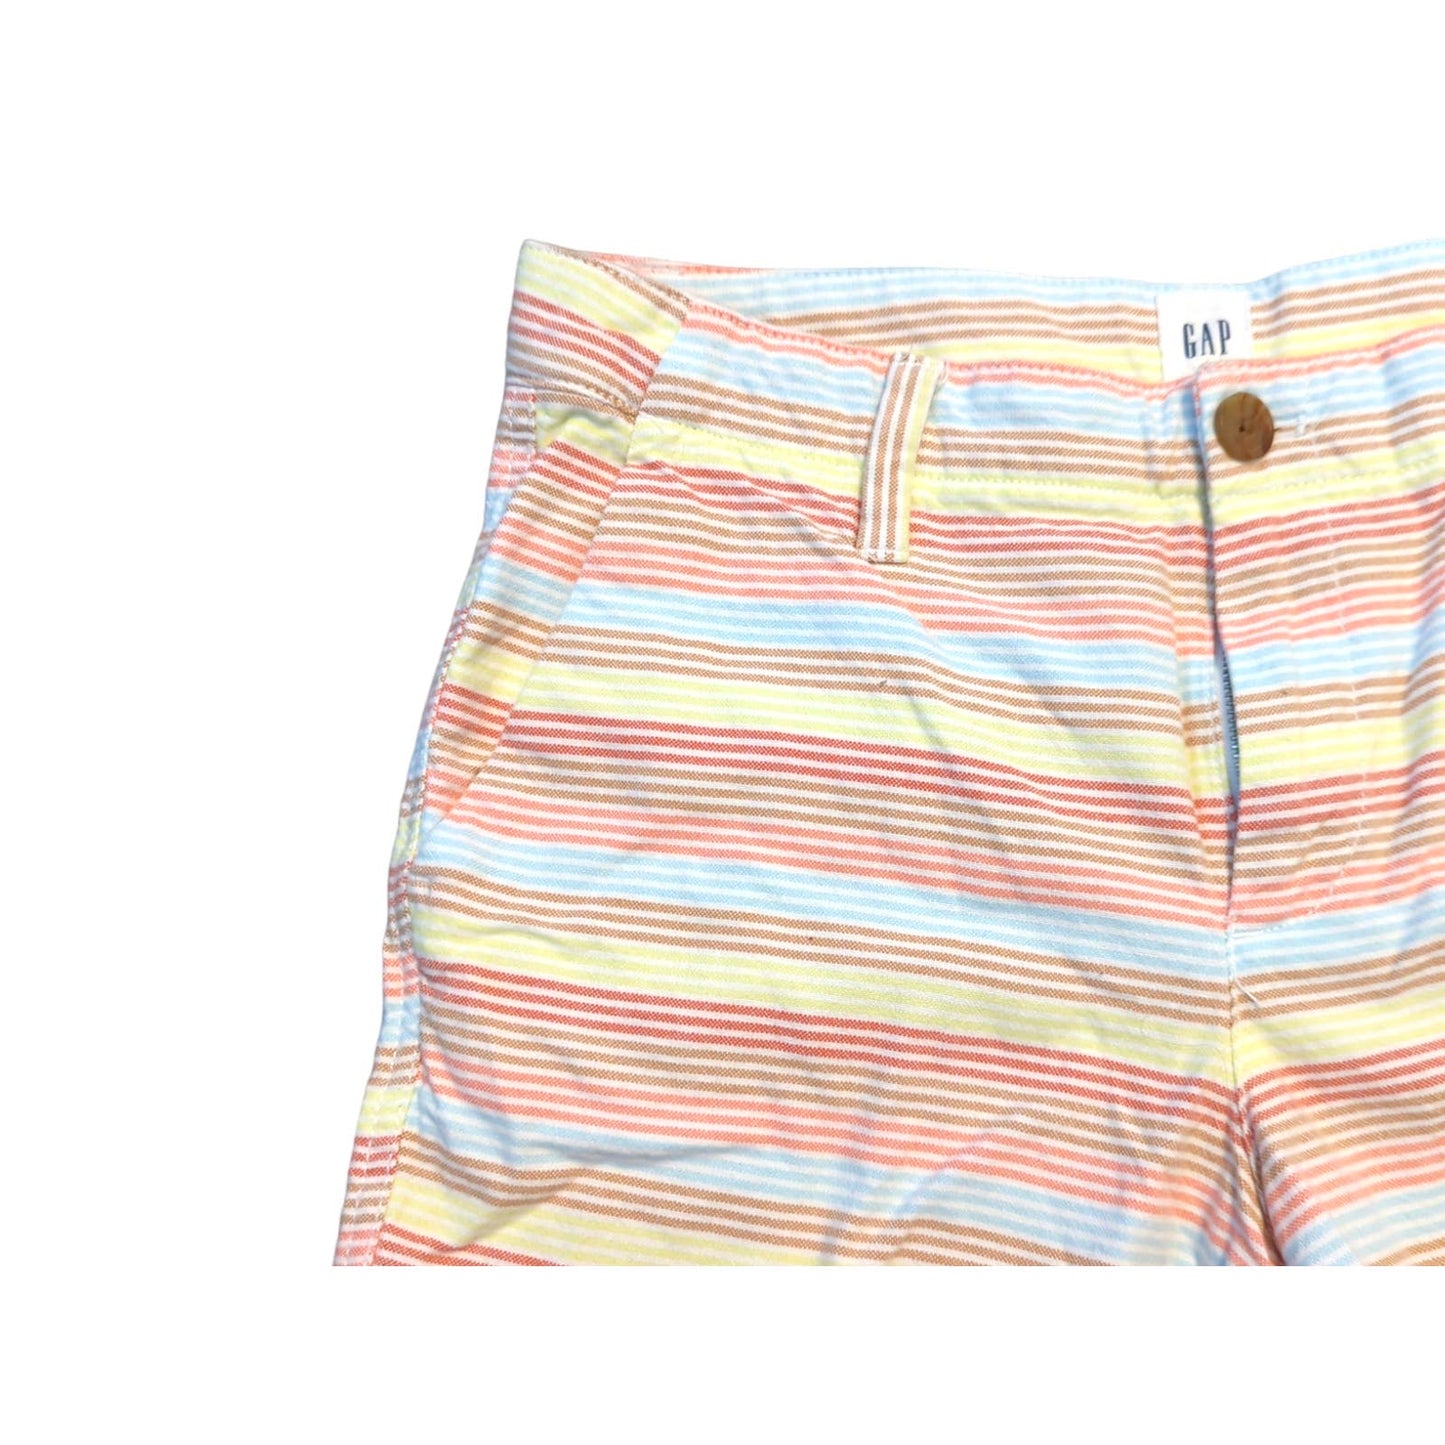 GAP City Short Striped Shorts Size 2 Summer Vacation